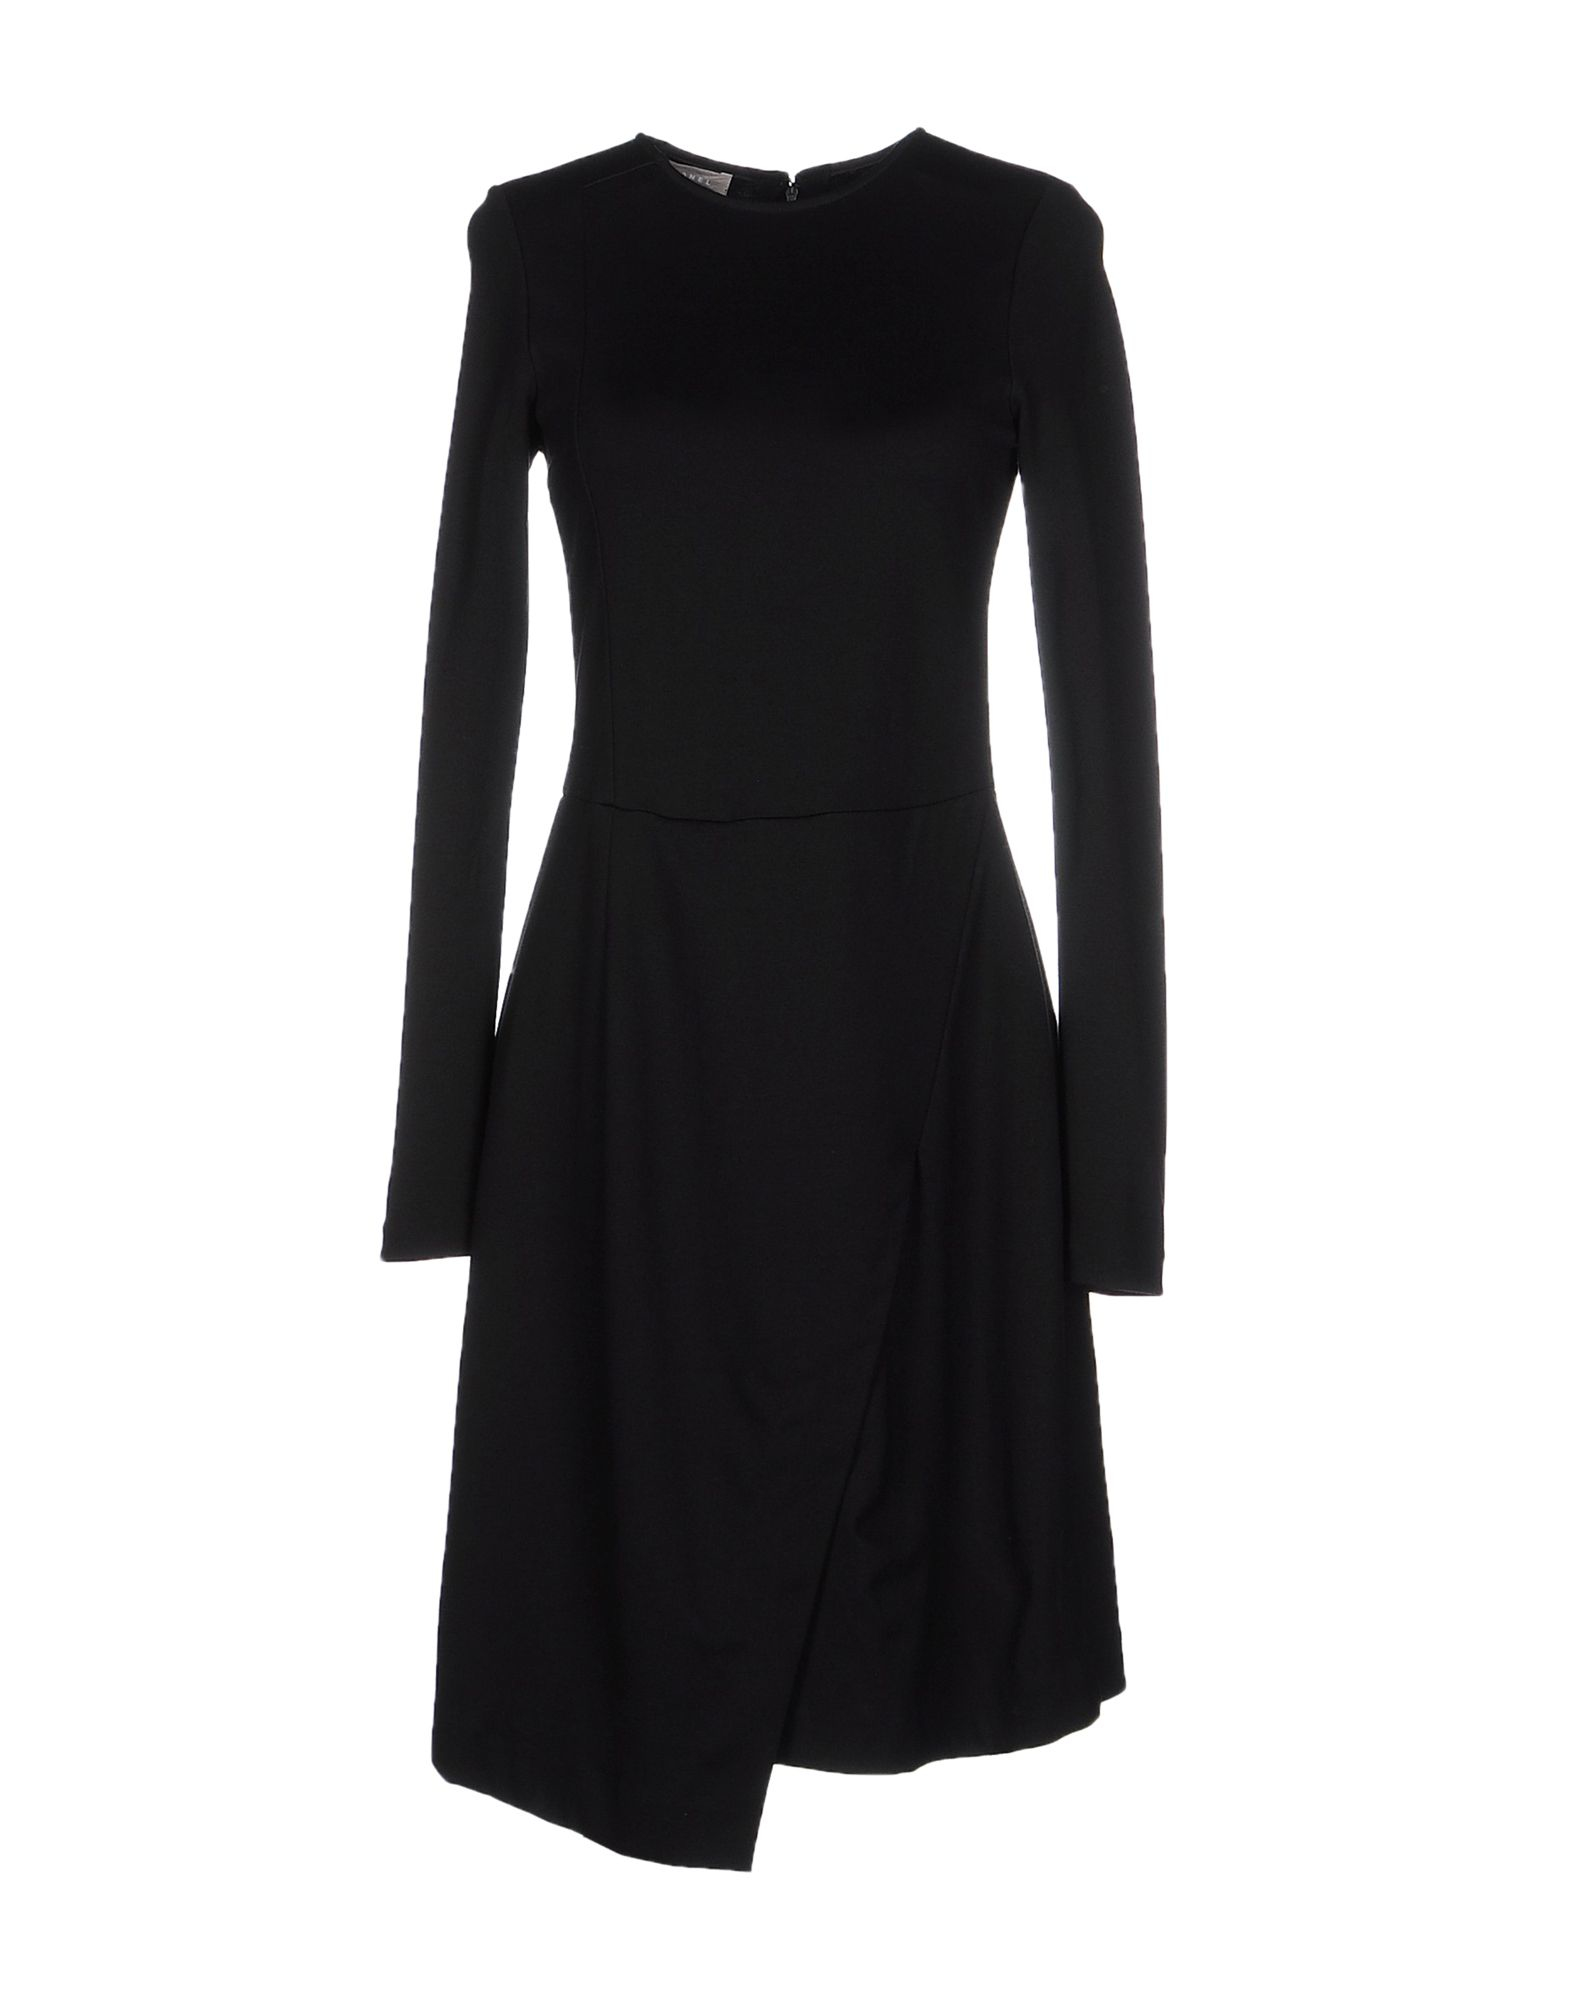 Stefanel Synthetic Asymmetric Crepe Dress in Black - Lyst